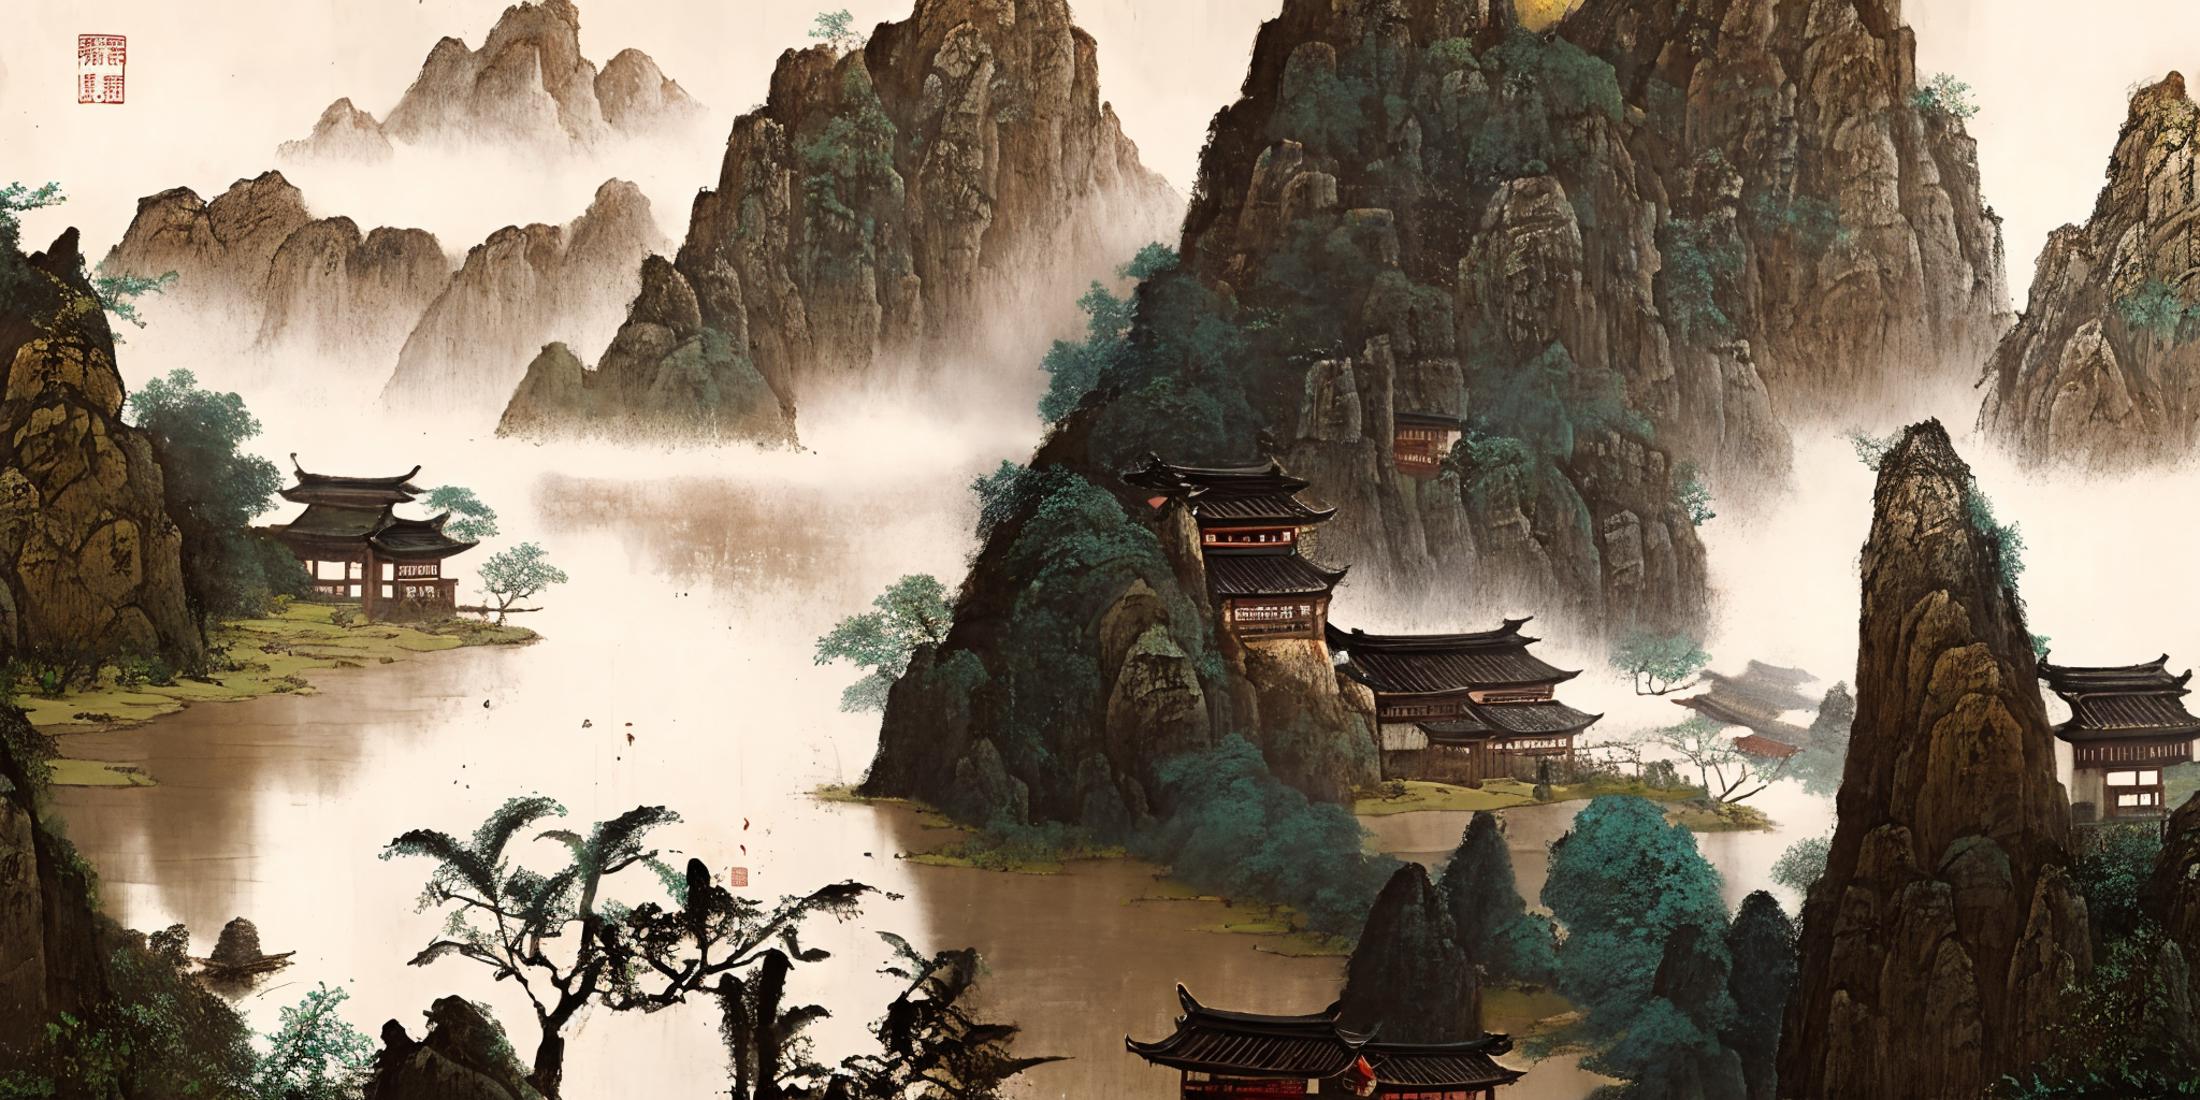 UIA illustration lora|Chinese feng shui ink landscape painting image by dotapickban